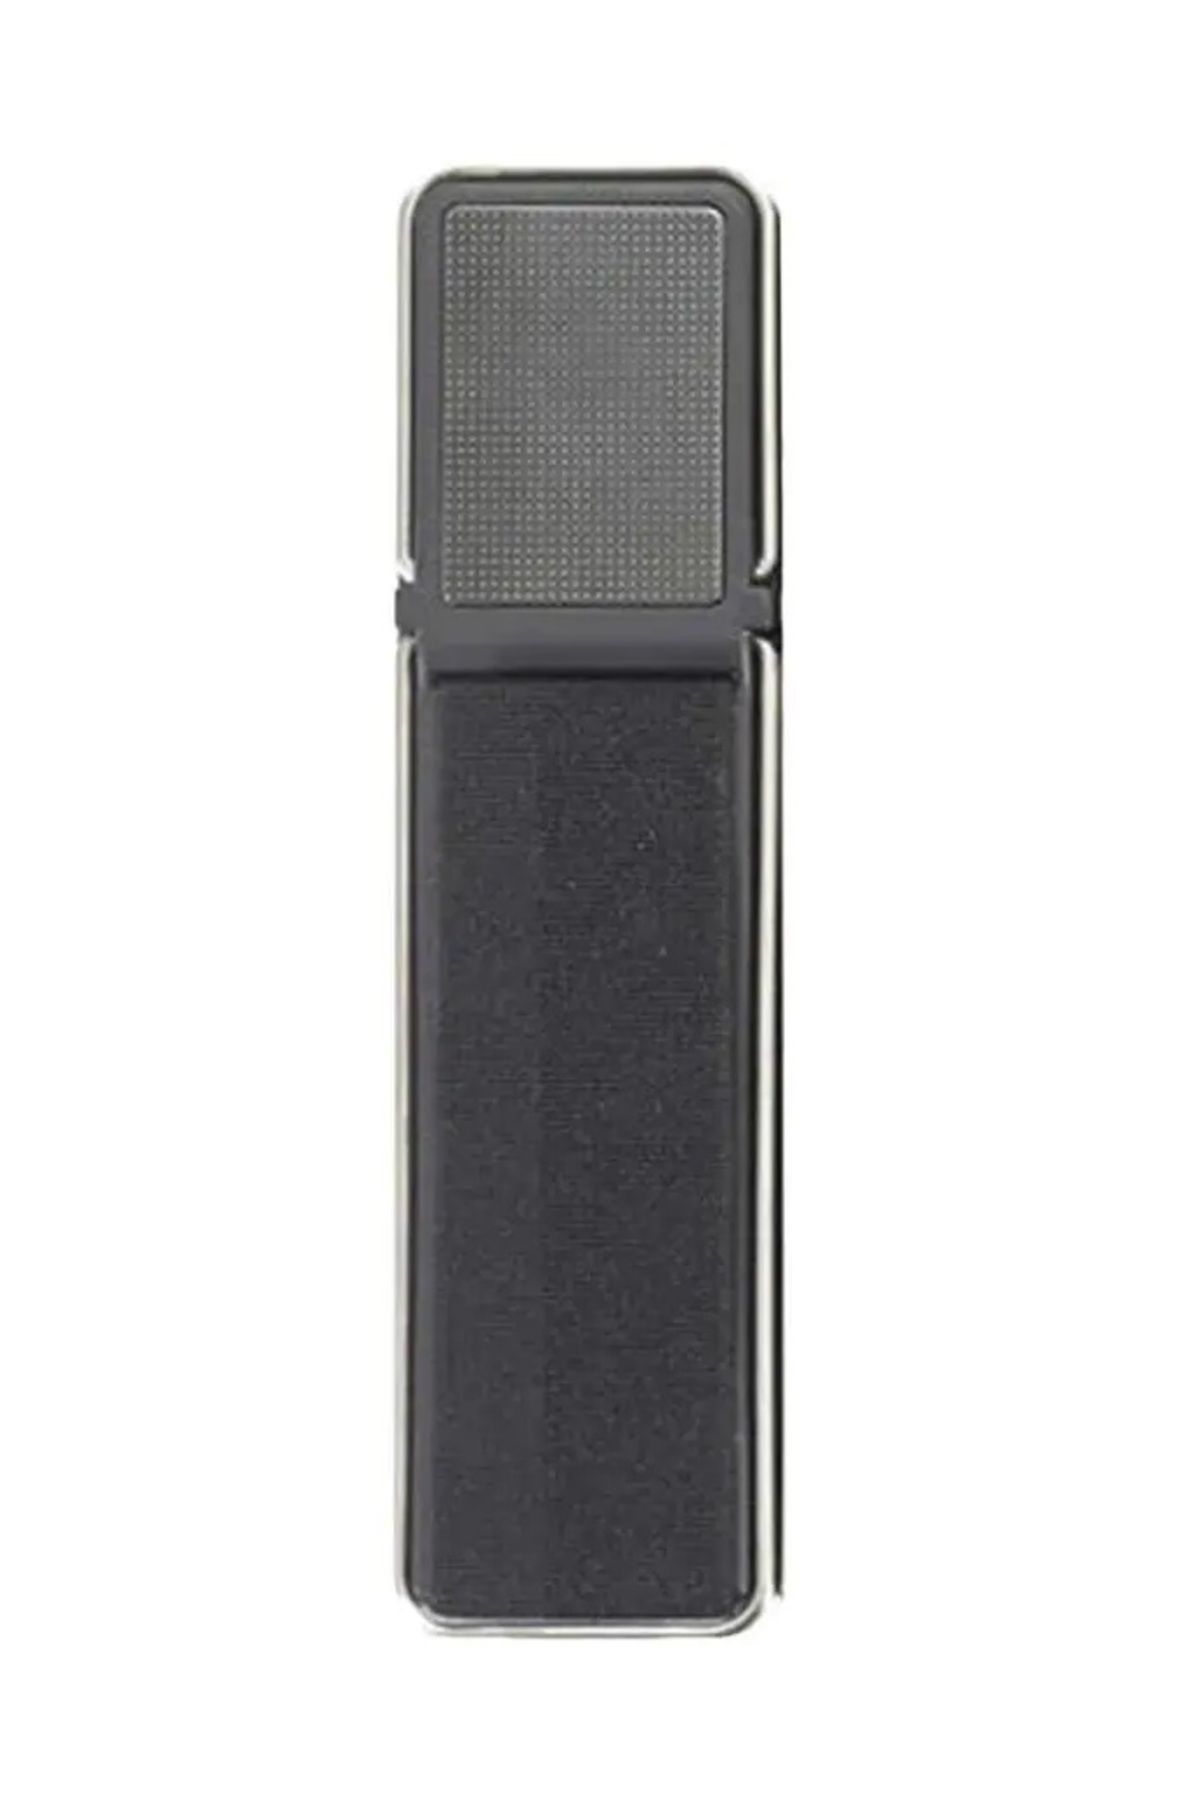 Spelt Manyetik Lastikli Kılıf Bandı Kayışlı Kılıf Askı Telefon Tutucu Yatay Dikey Stand Siyah